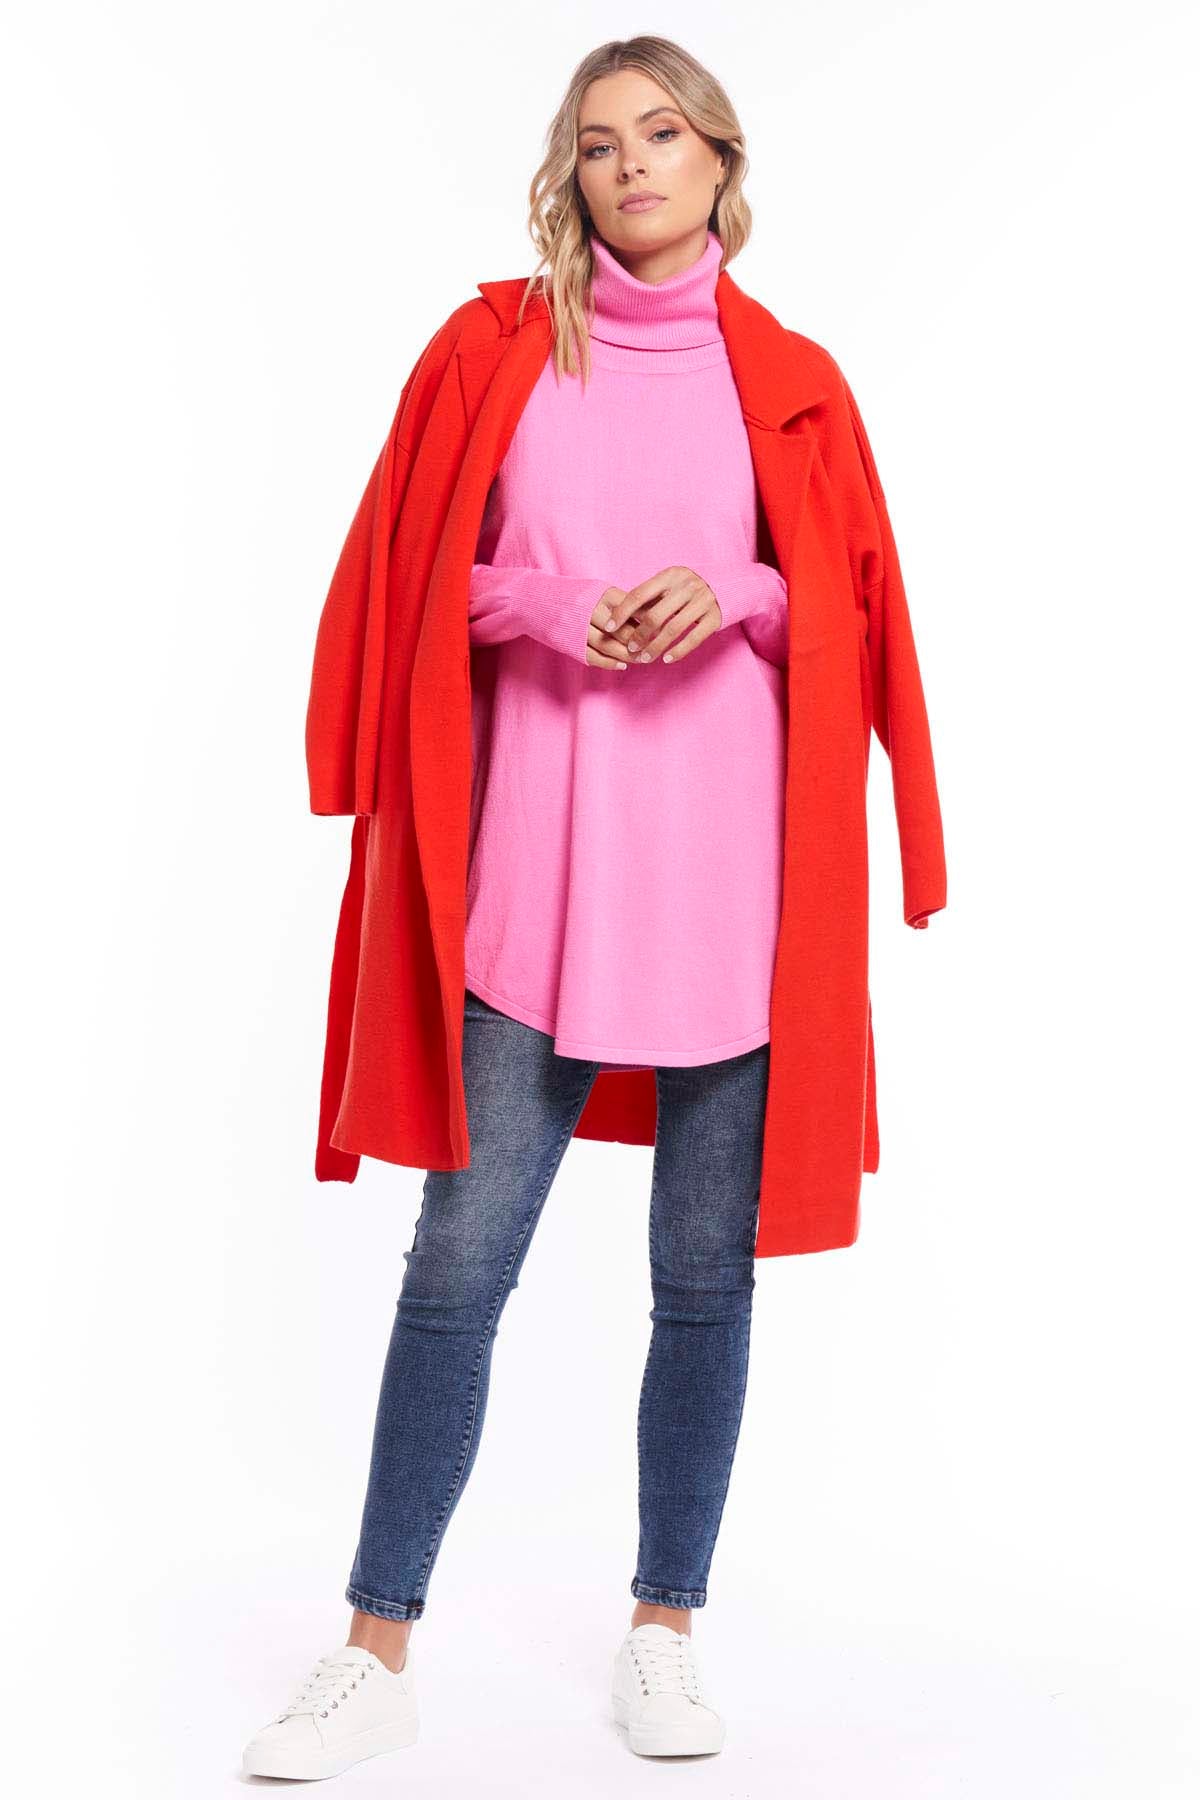 Betty Basics Fleur Knit Jumper in Candy Pink - Hey Sara